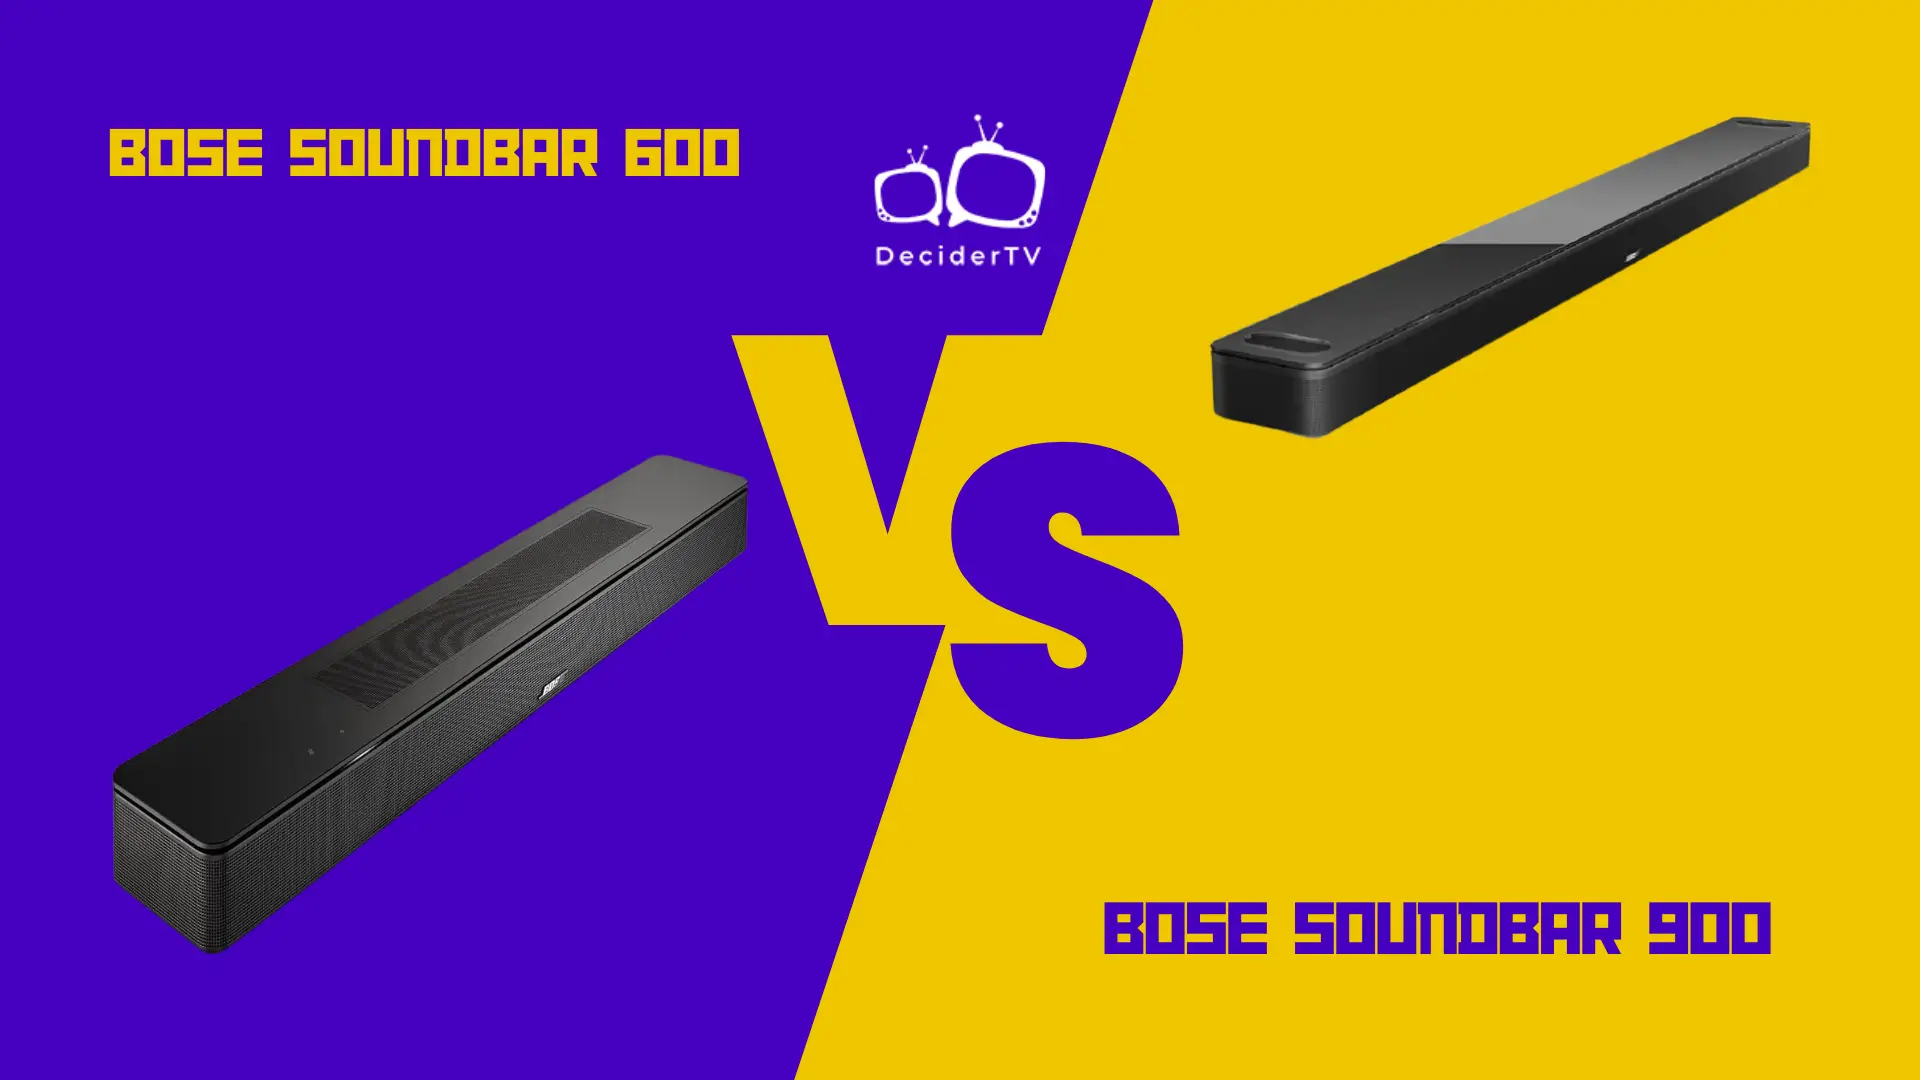 Bose Soundbar 600 vs 900